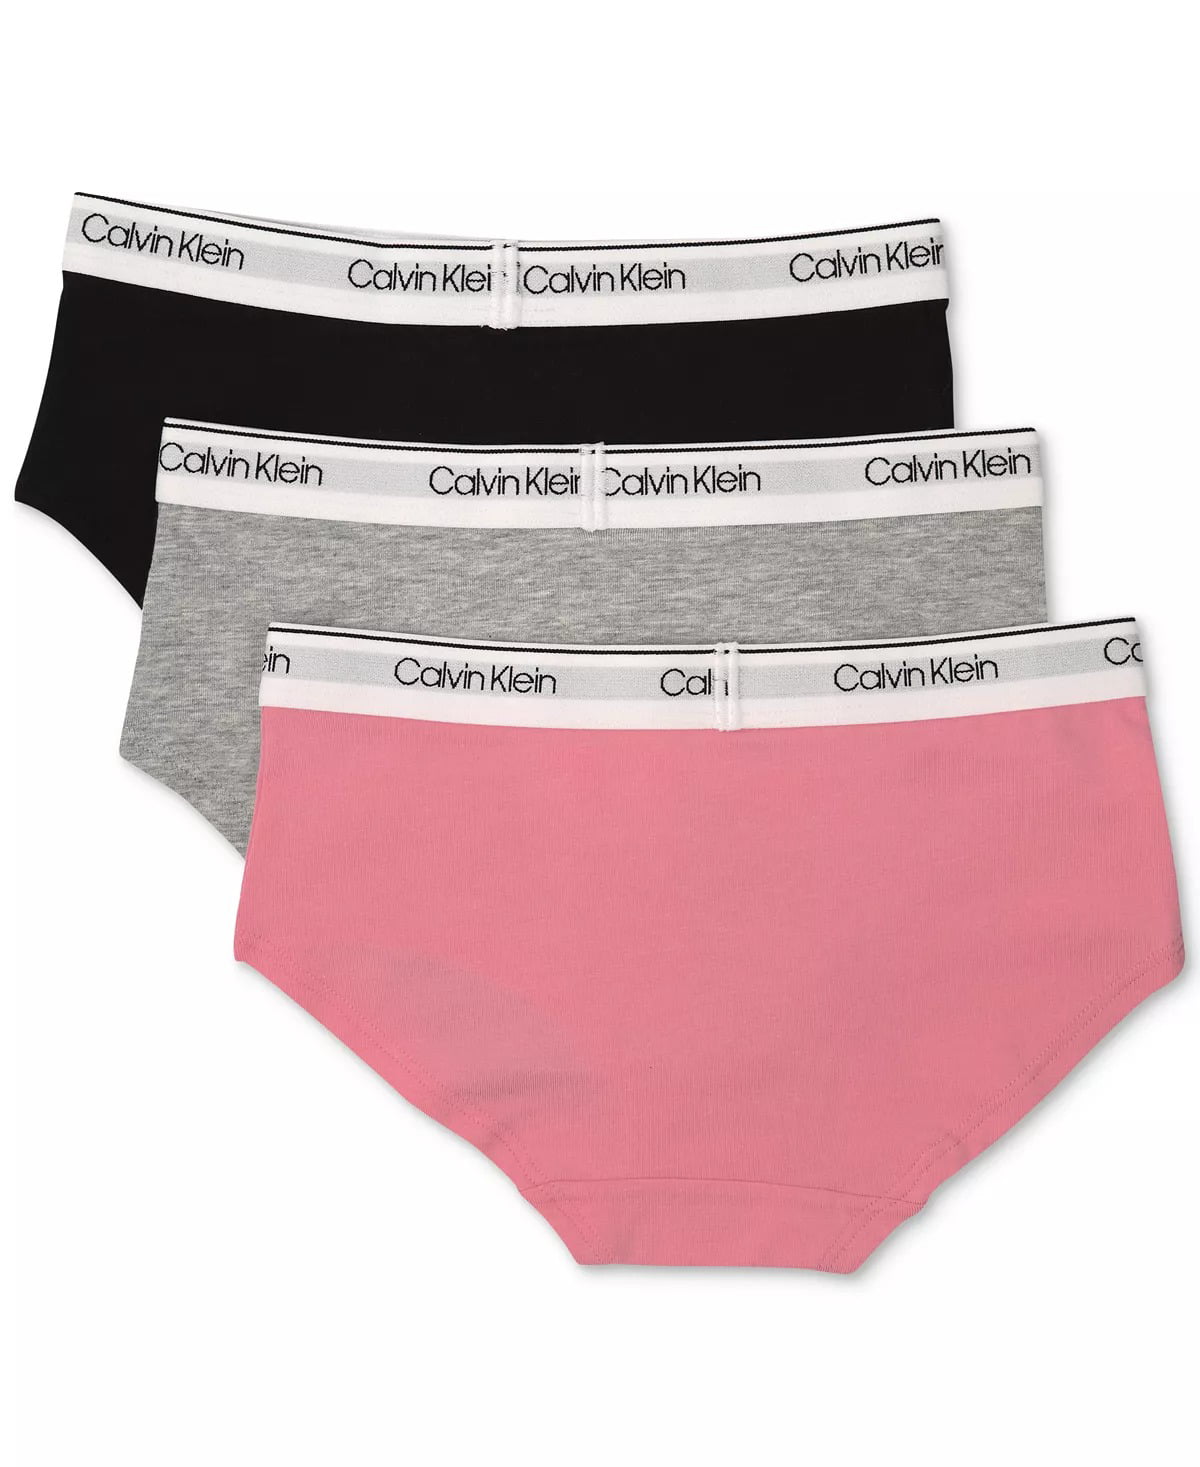 Calvin Klein Ladies' Seamless Briefs, 3-pack Color Black/Cashe